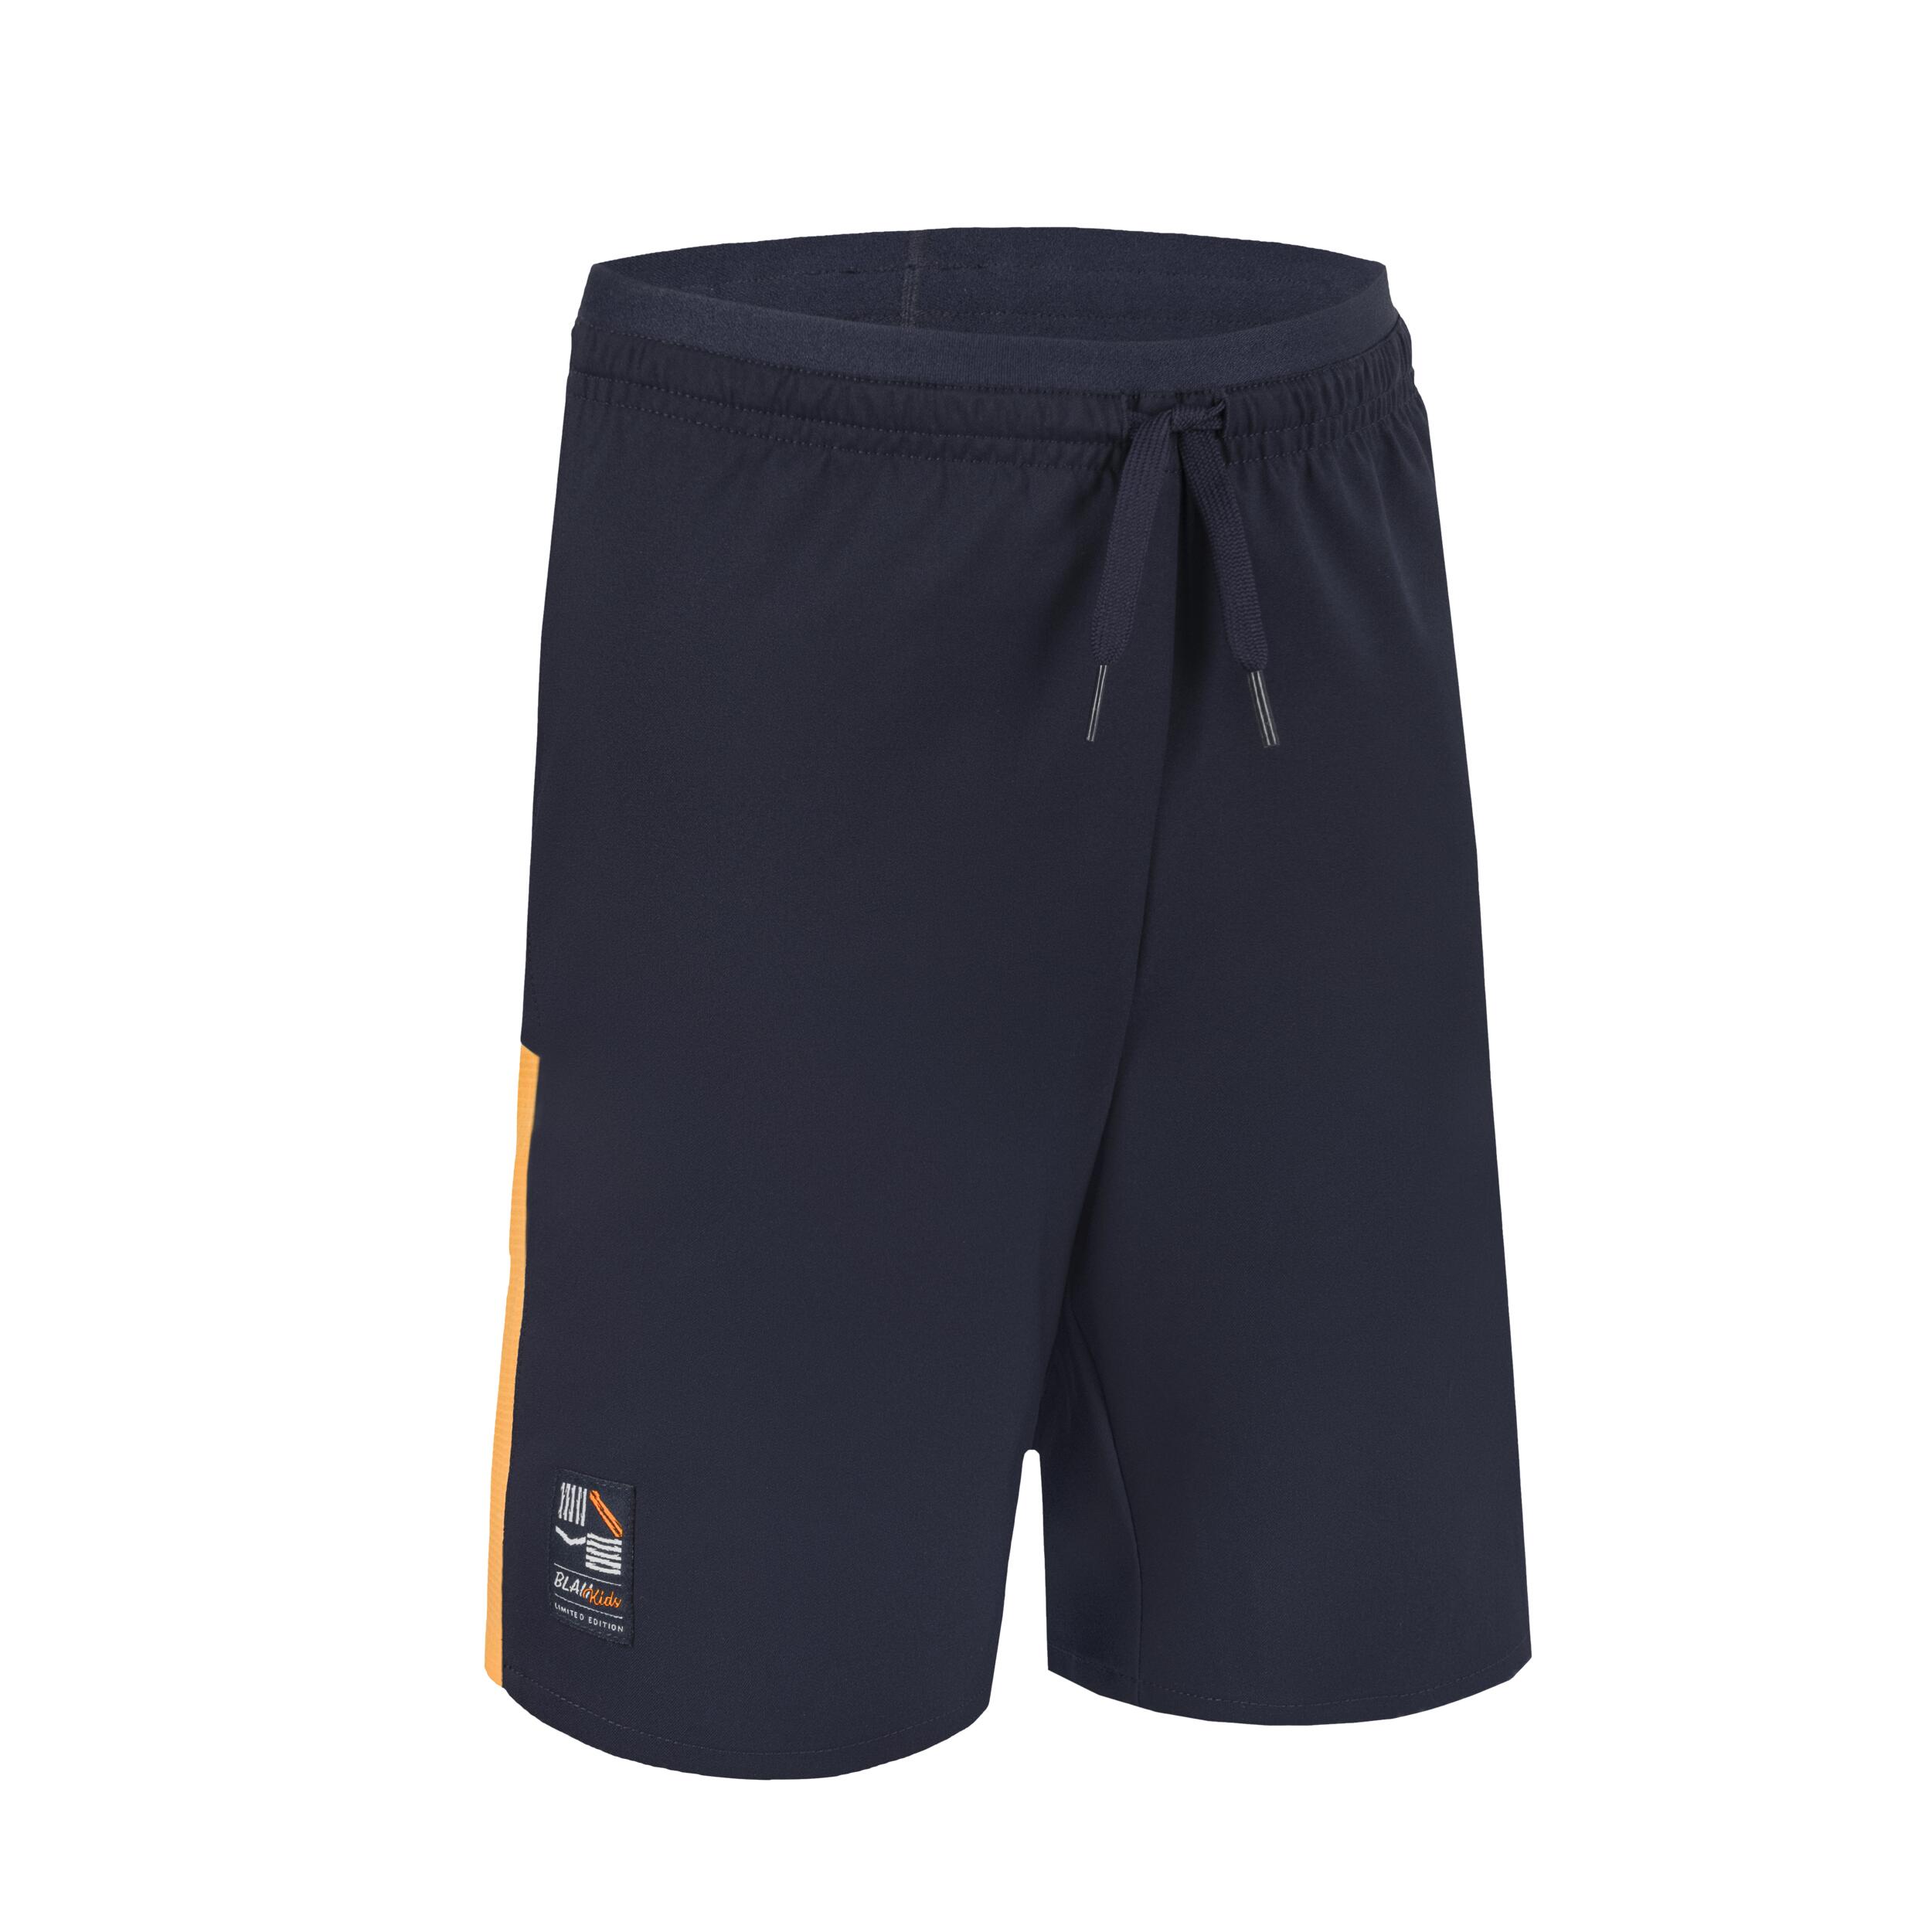 KIPSTA Kids' Football Shorts - Navy/Orange